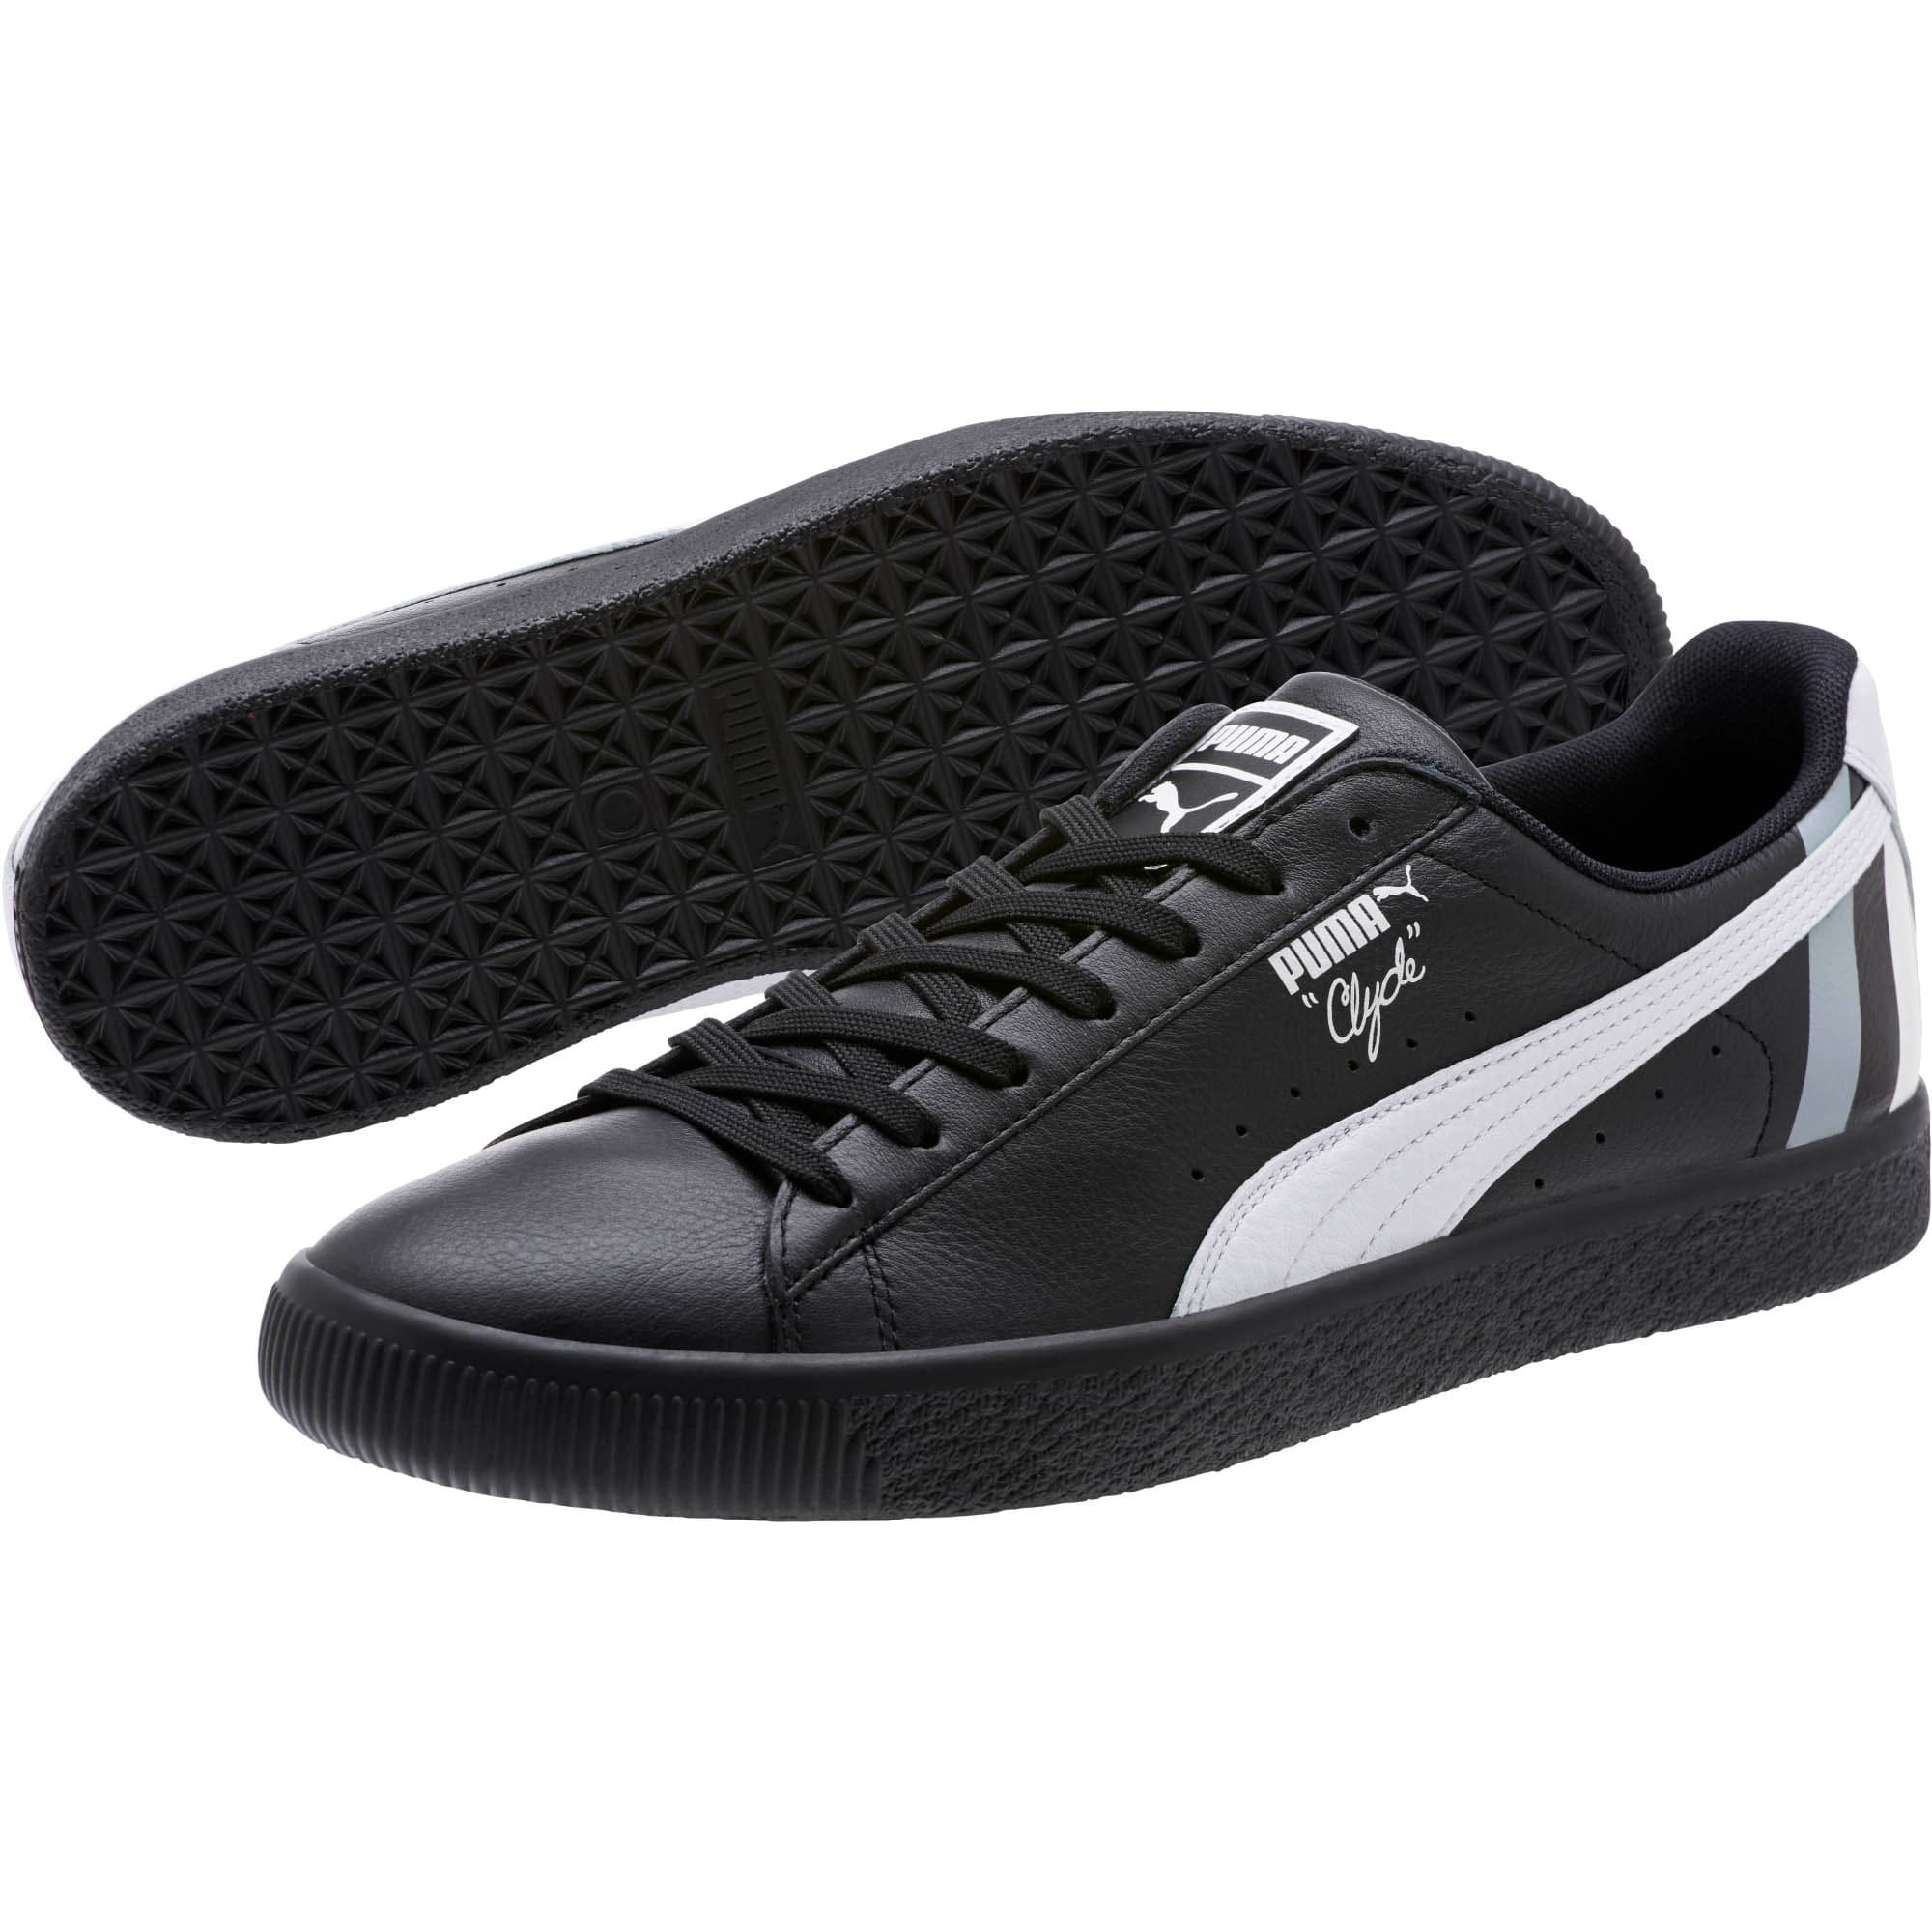 white puma shoes with black stripe